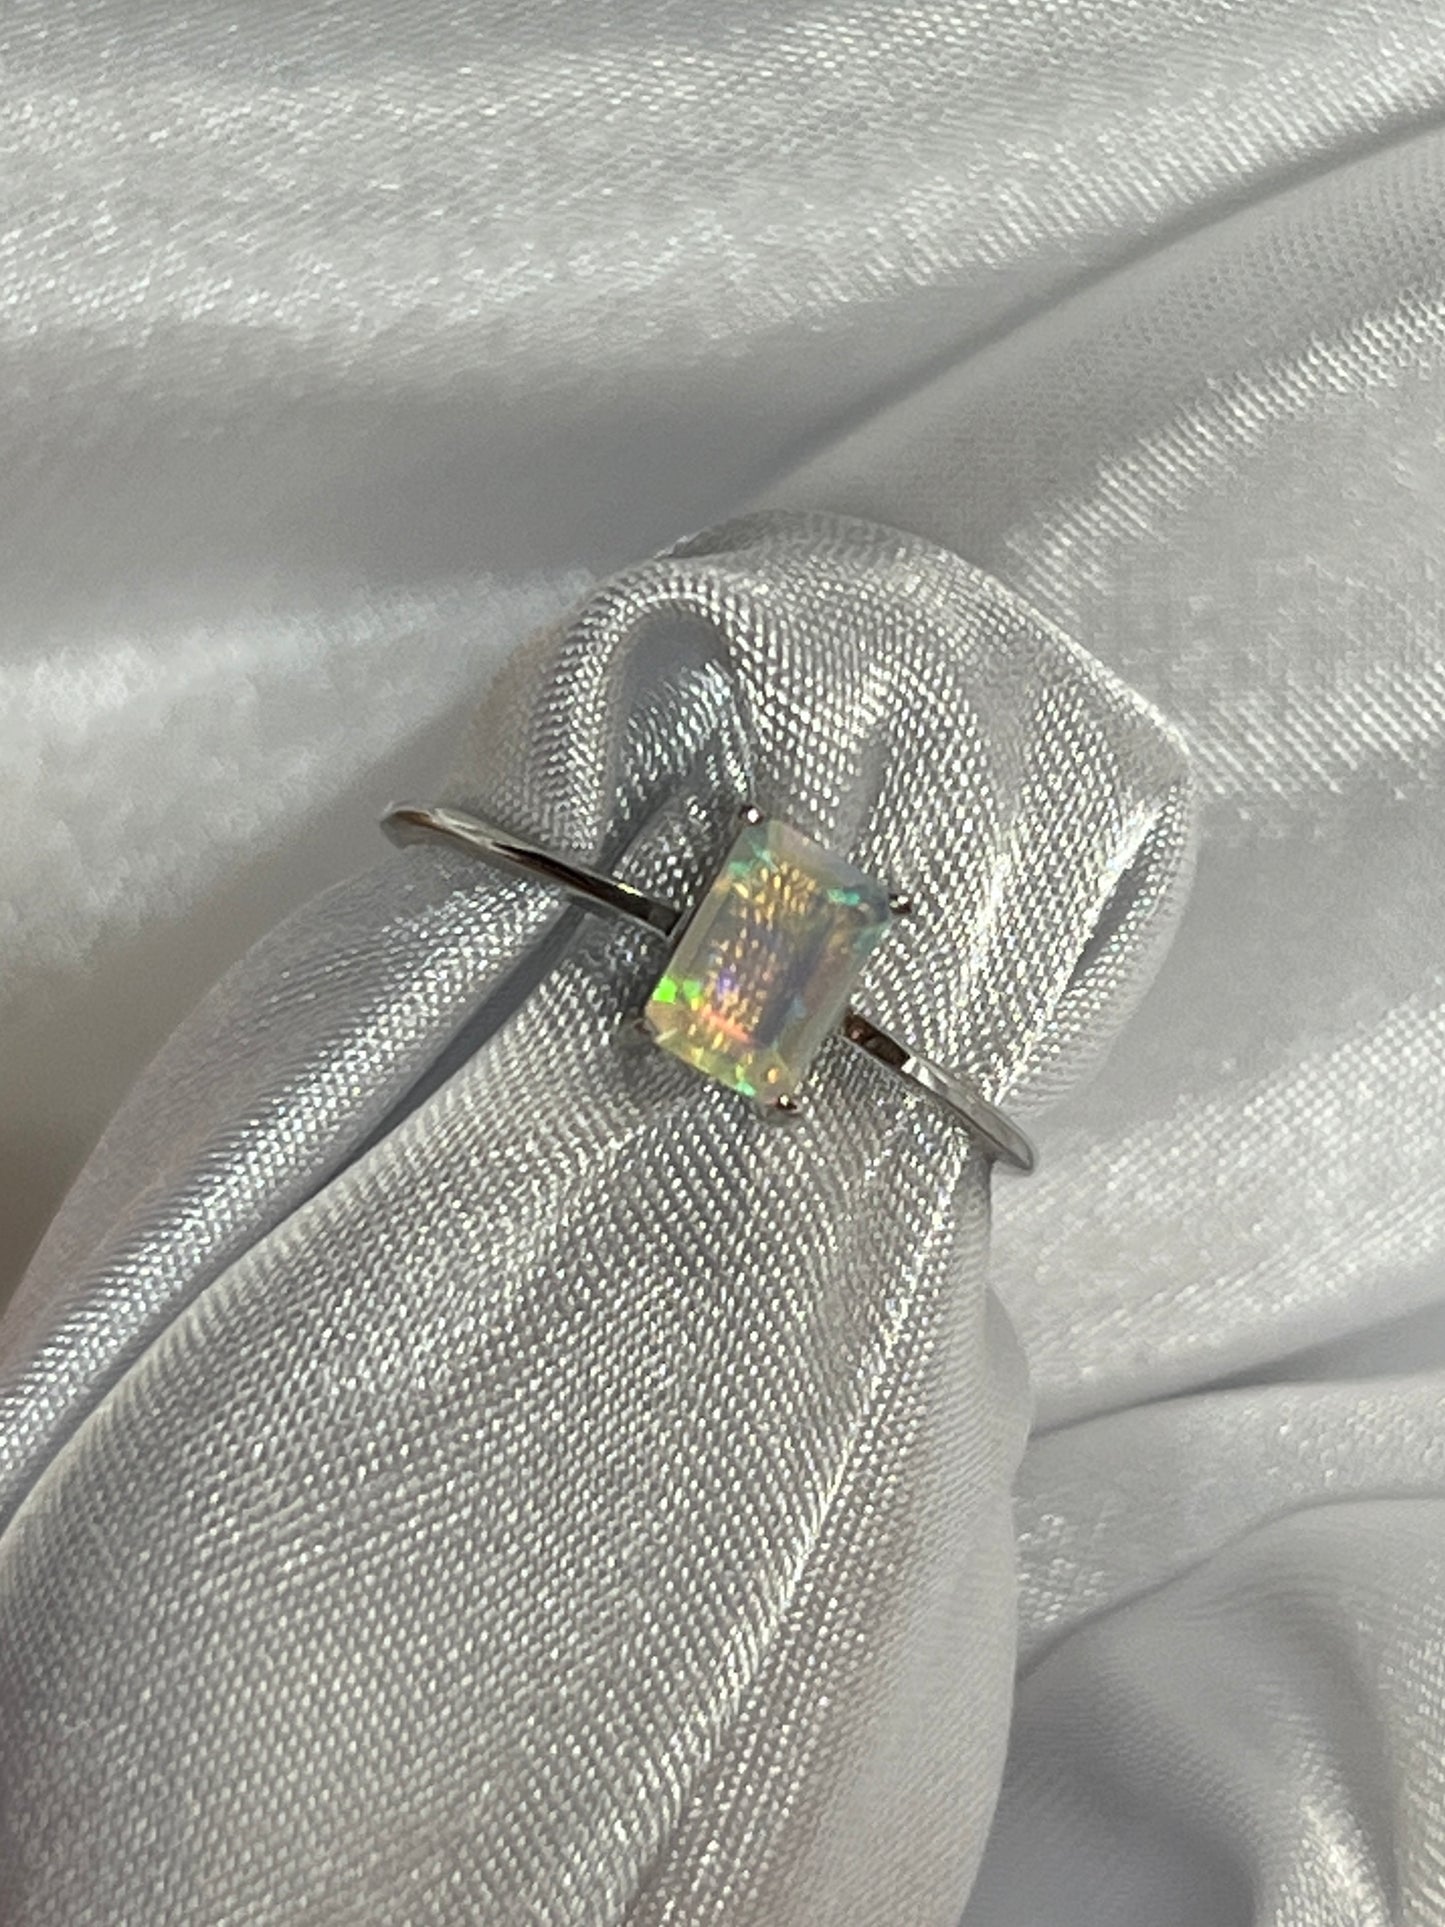 A cushion cut Ethiopian opal ring sitting on a white cloth.